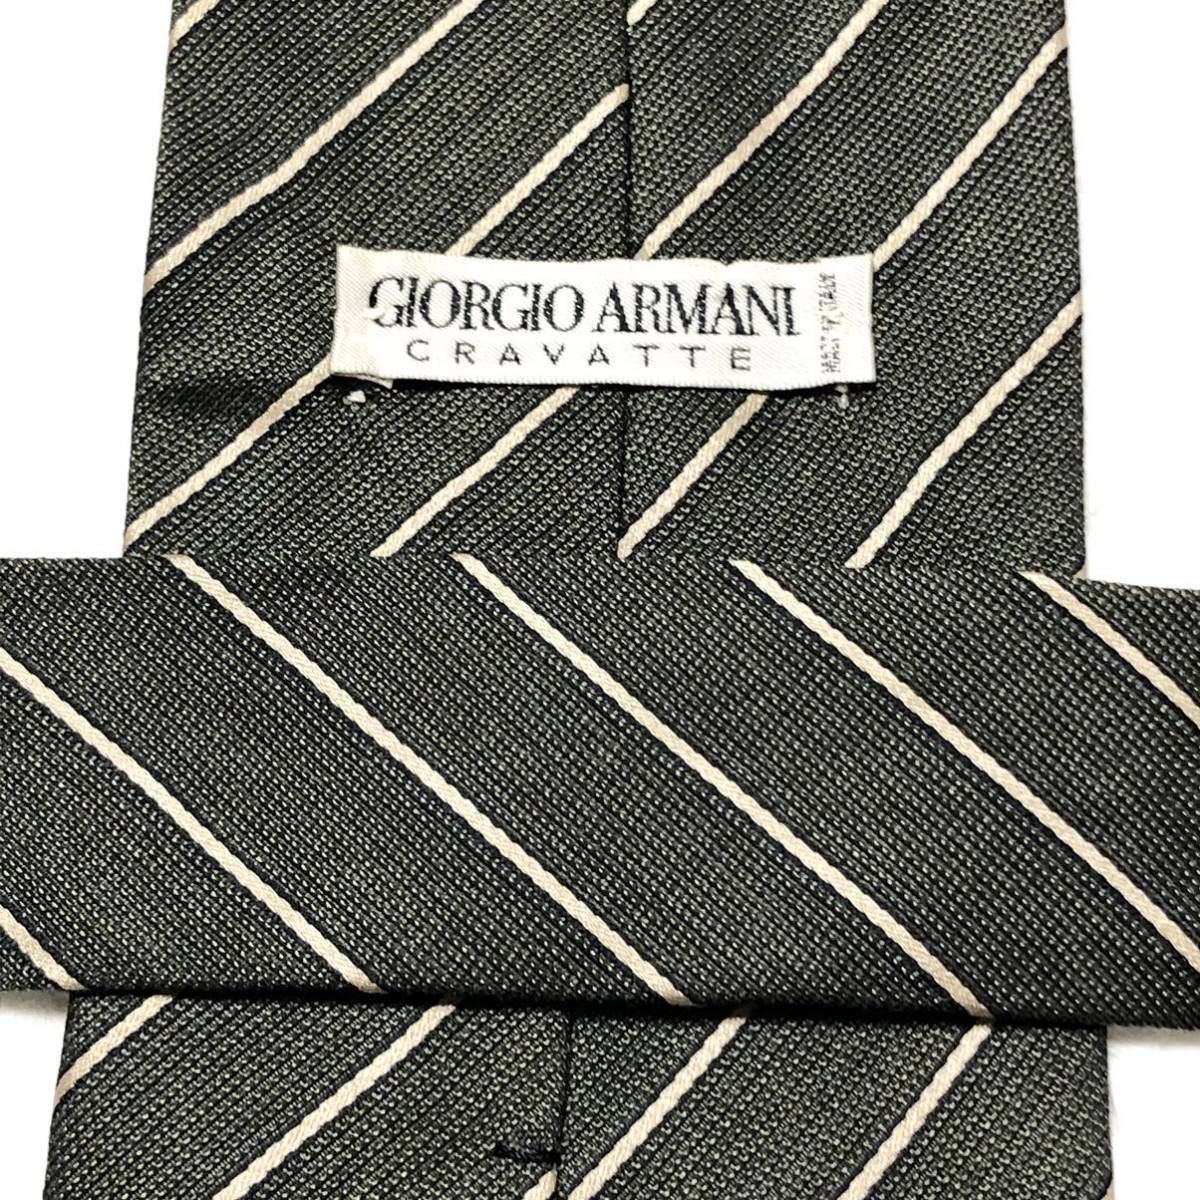 # beautiful goods # rare silk .#GIORGIO ARMANI CRAVATTEjoru geo Armani necktie reji men taru stripe silk & wool Italy made 